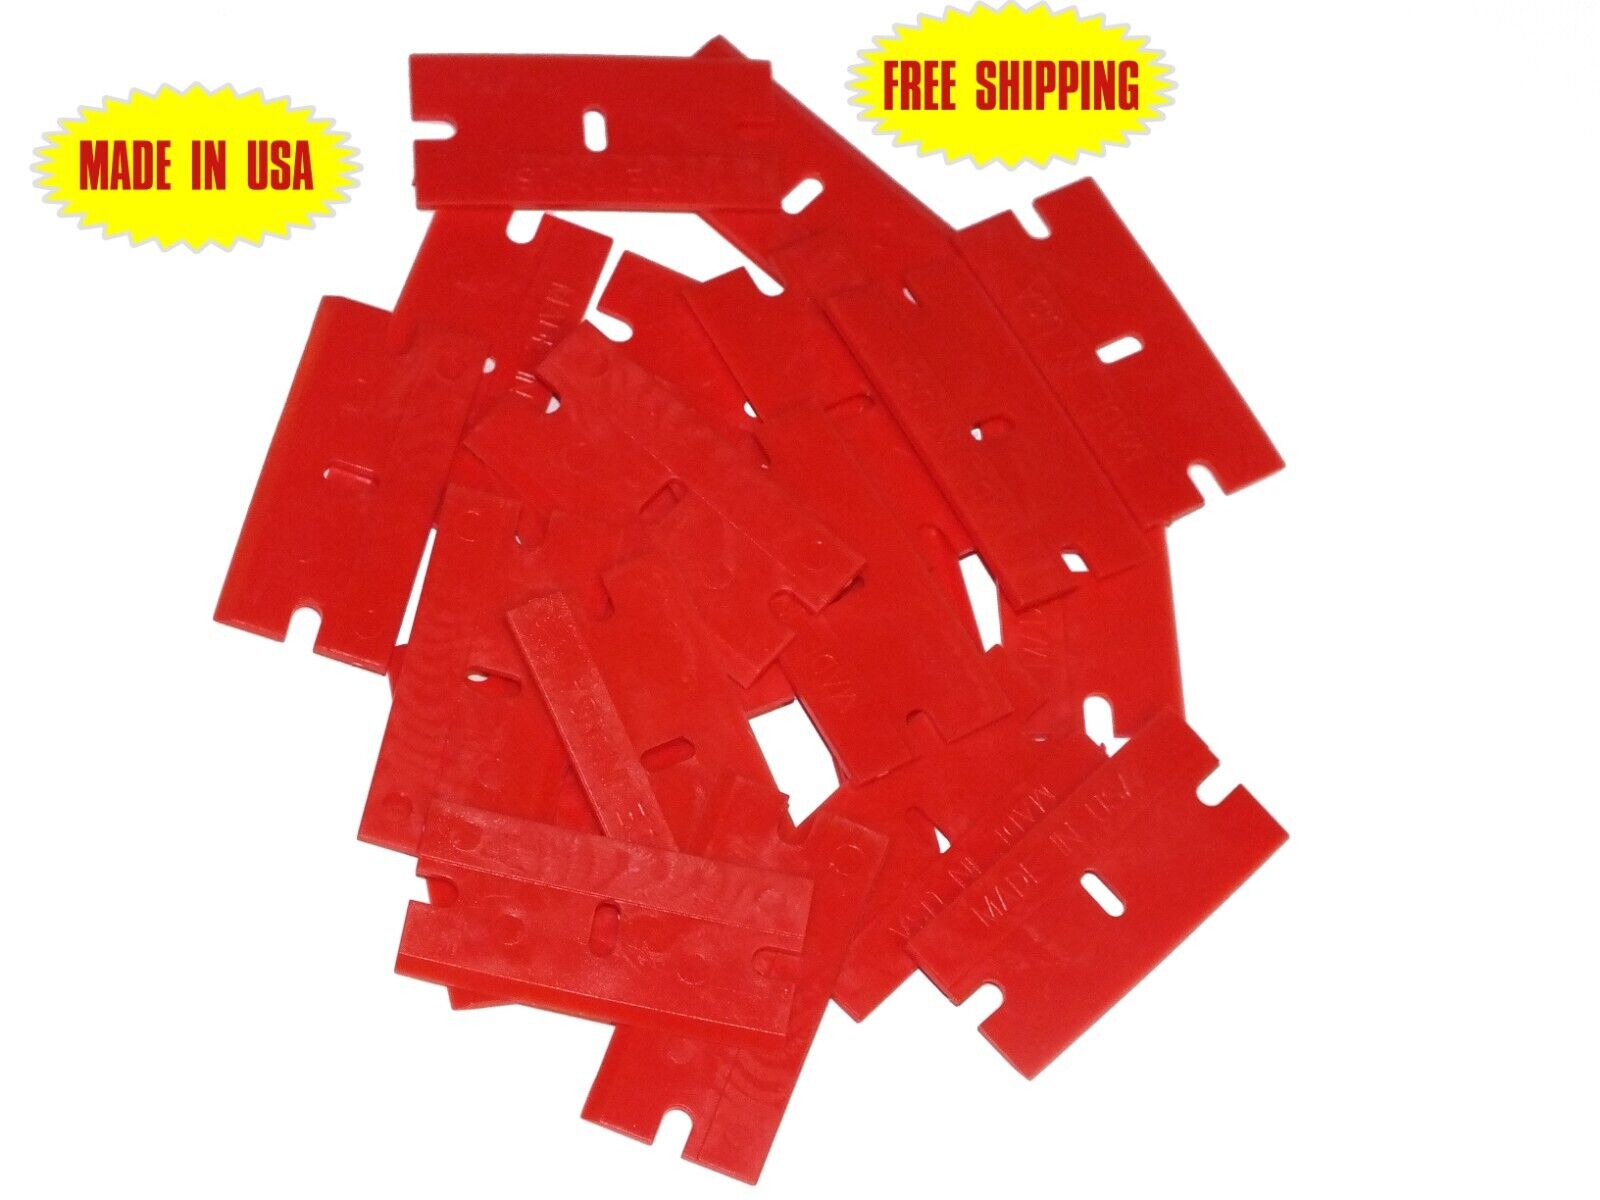 100 PK Plastic Razor Blades - Bulk pack. Made is U.S.A.